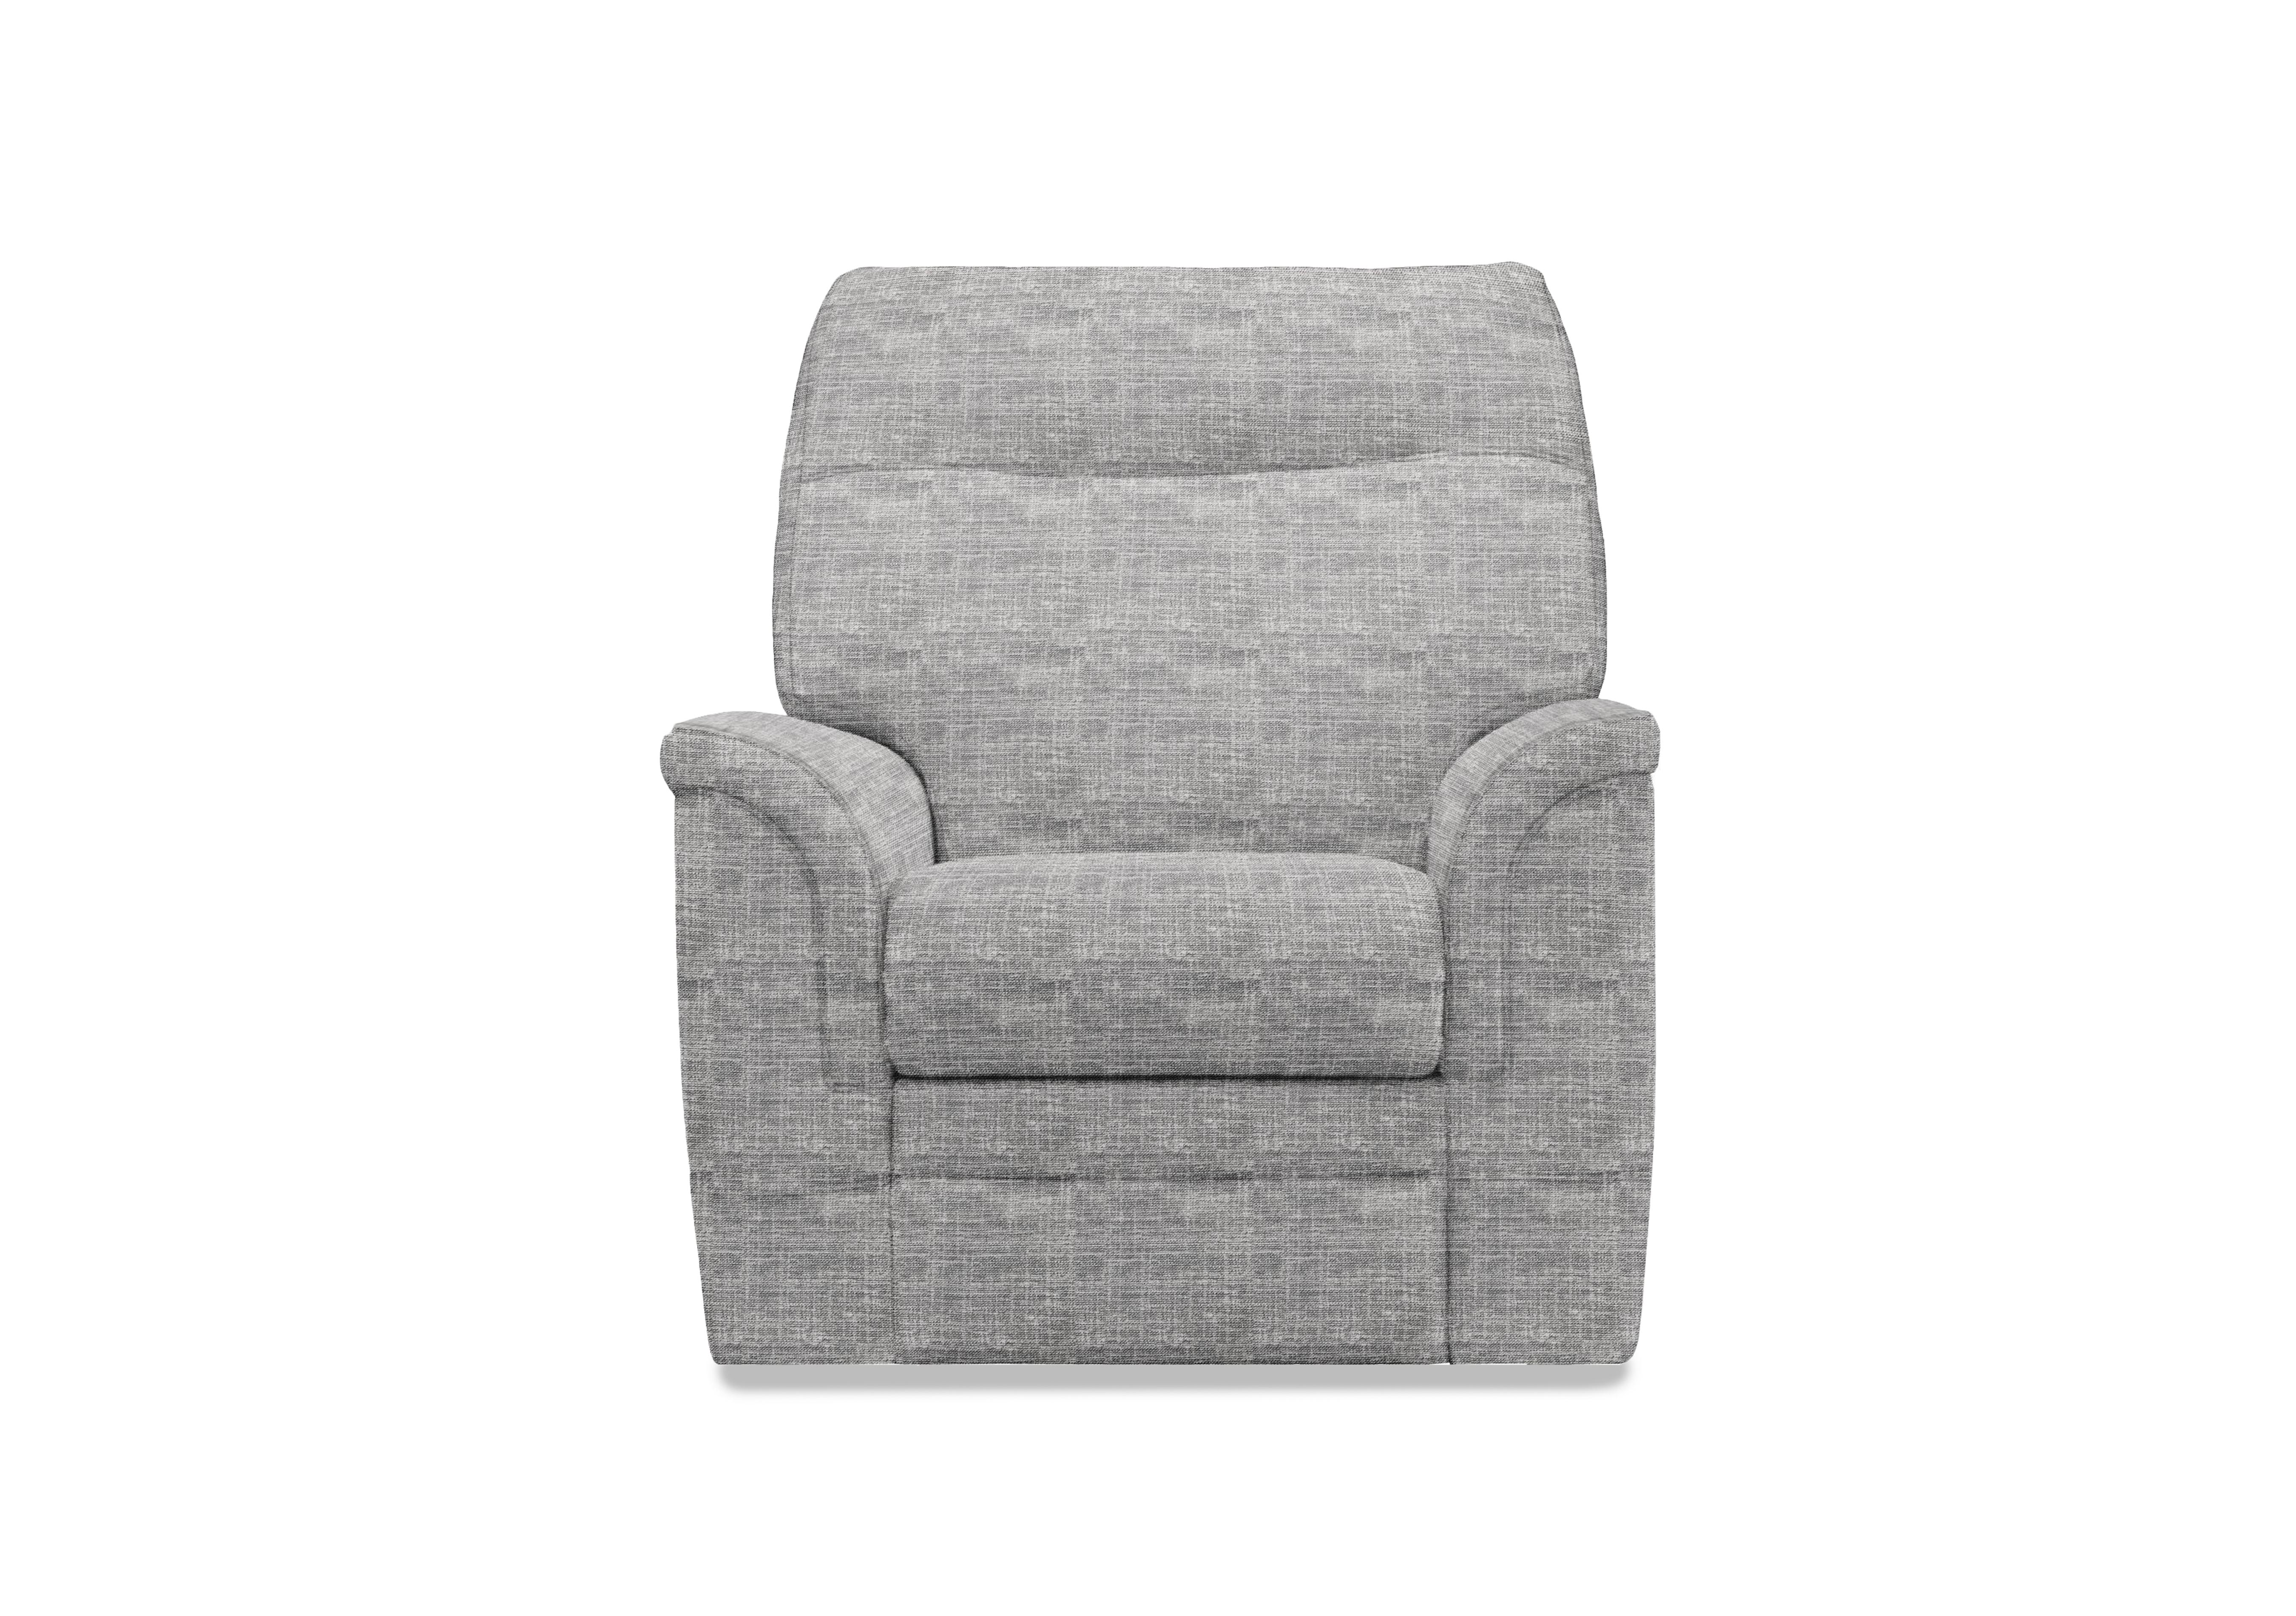 Hudson 23 Fabric Chair in Dash Stone  001497-0040 on Furniture Village